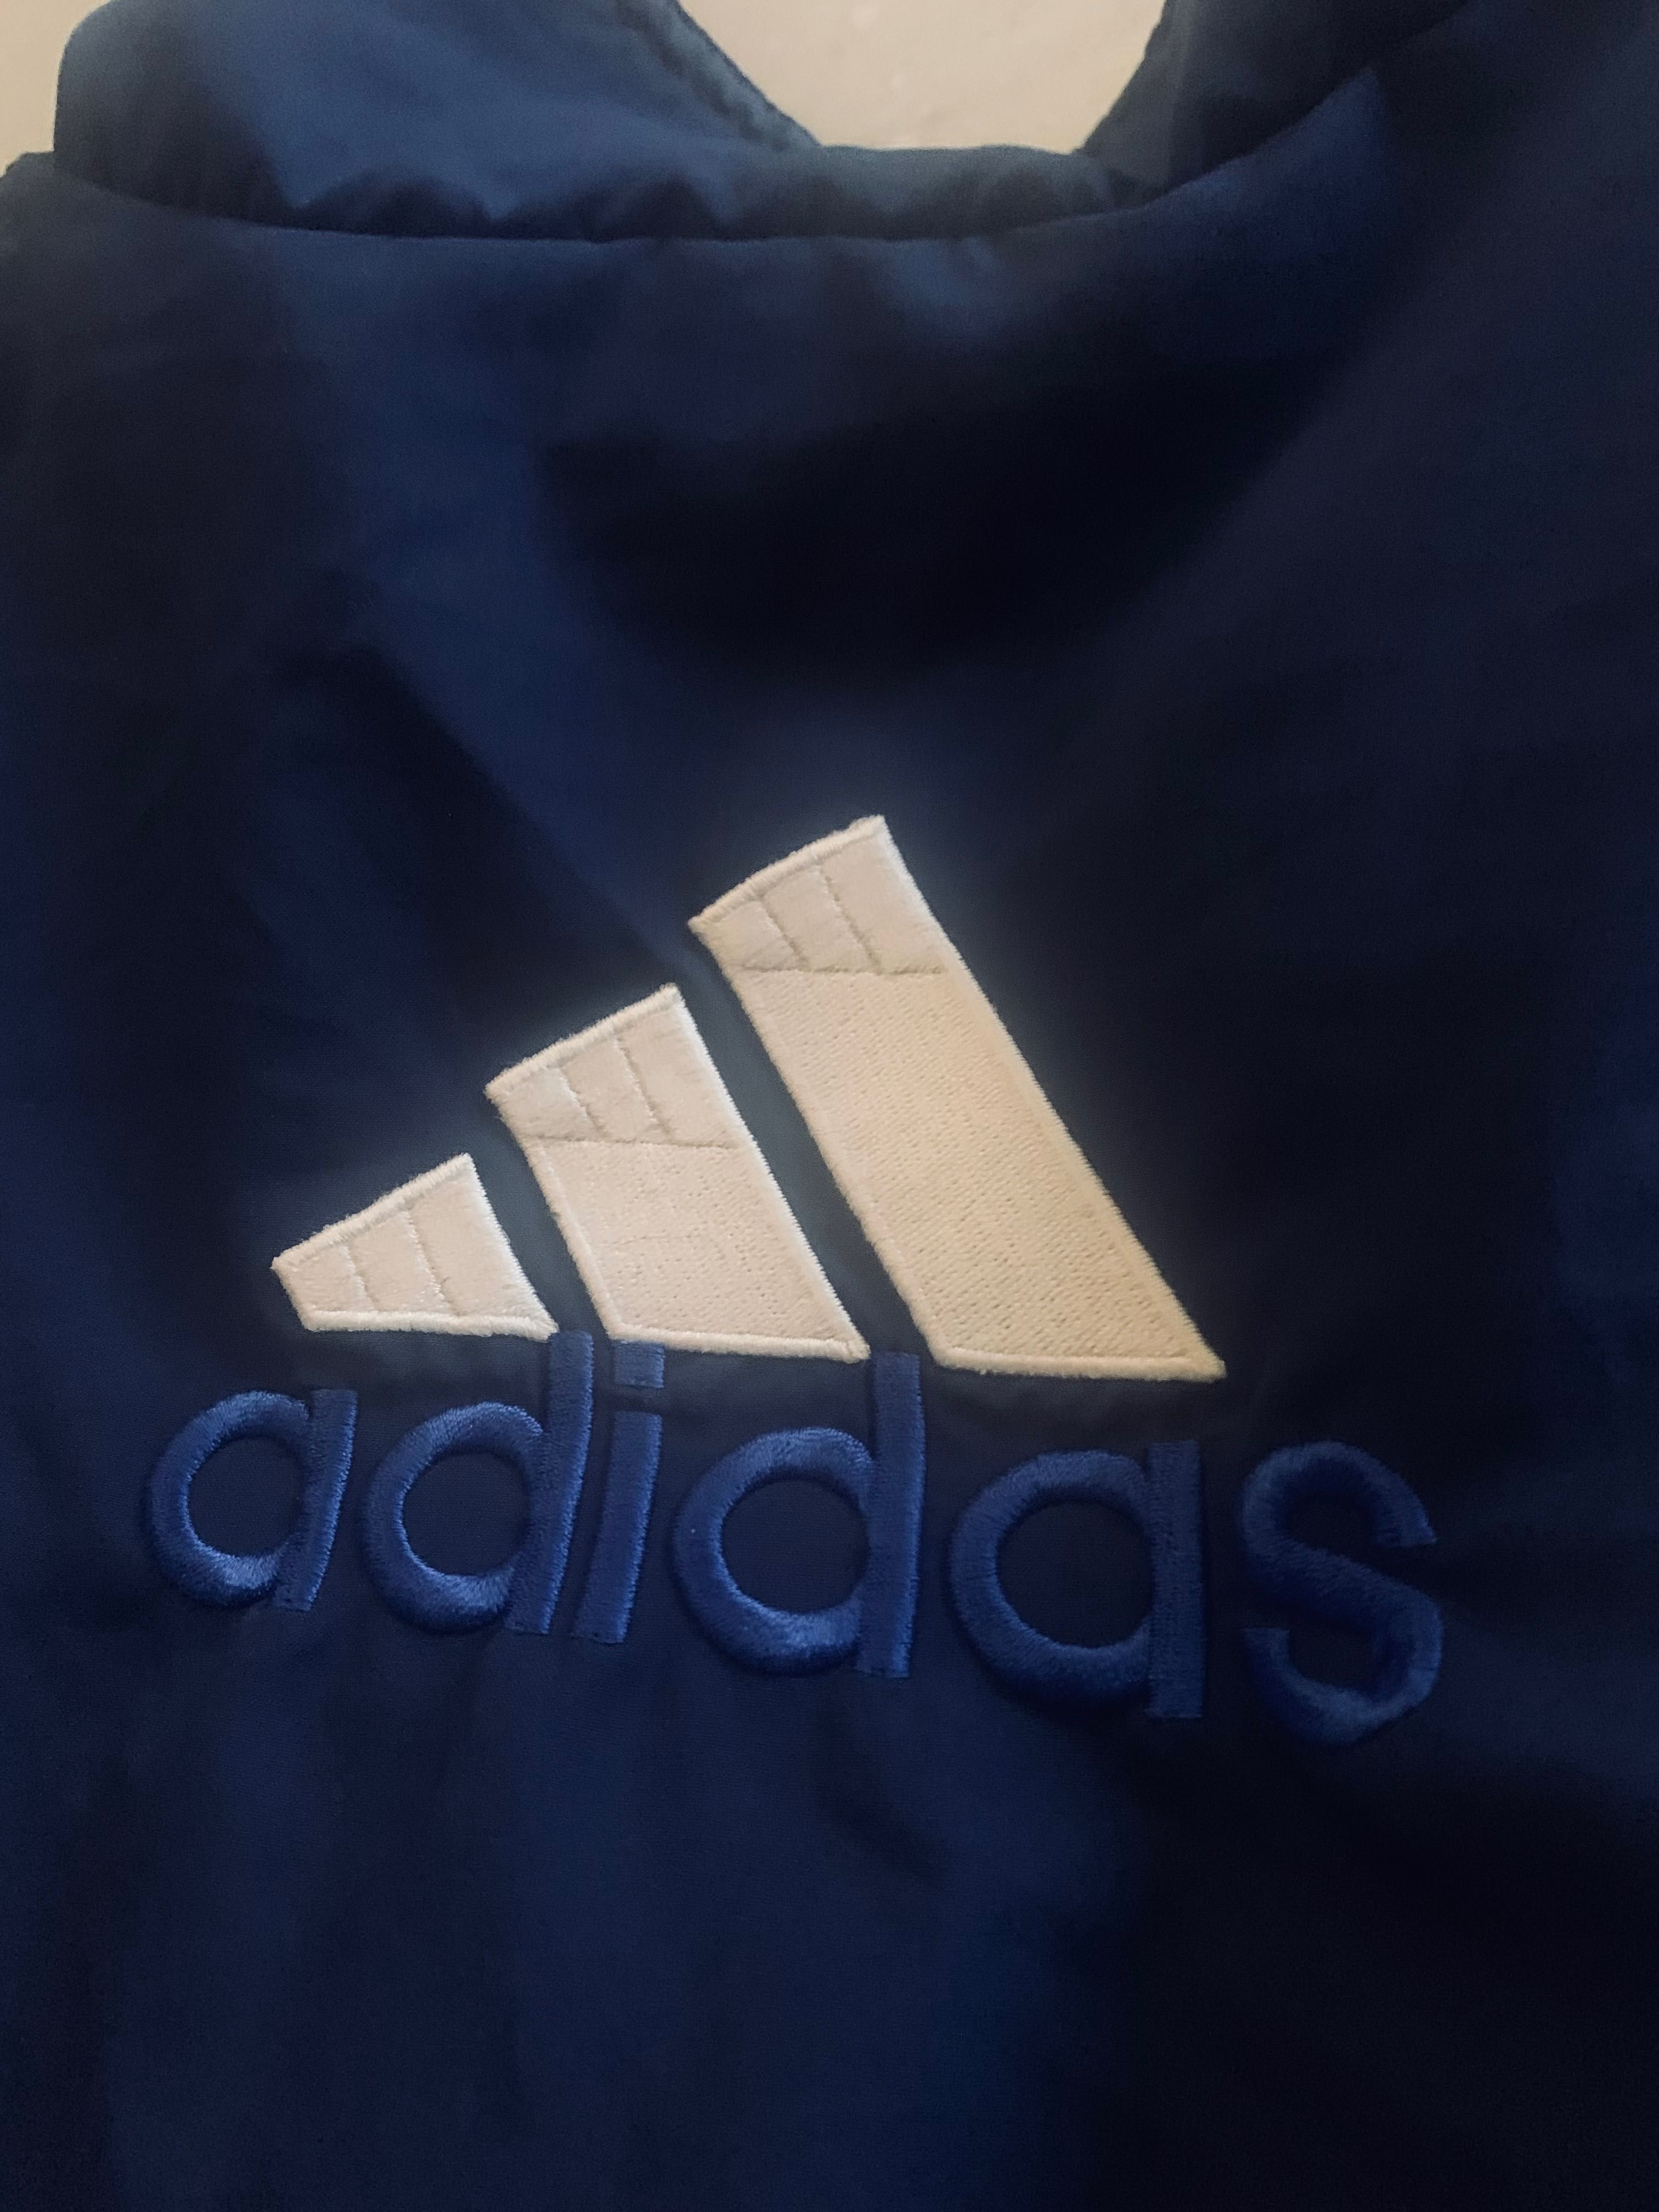 Adidas kurtka wiatrówka męska XL/L vintage r. 1999 extra stan, unikat